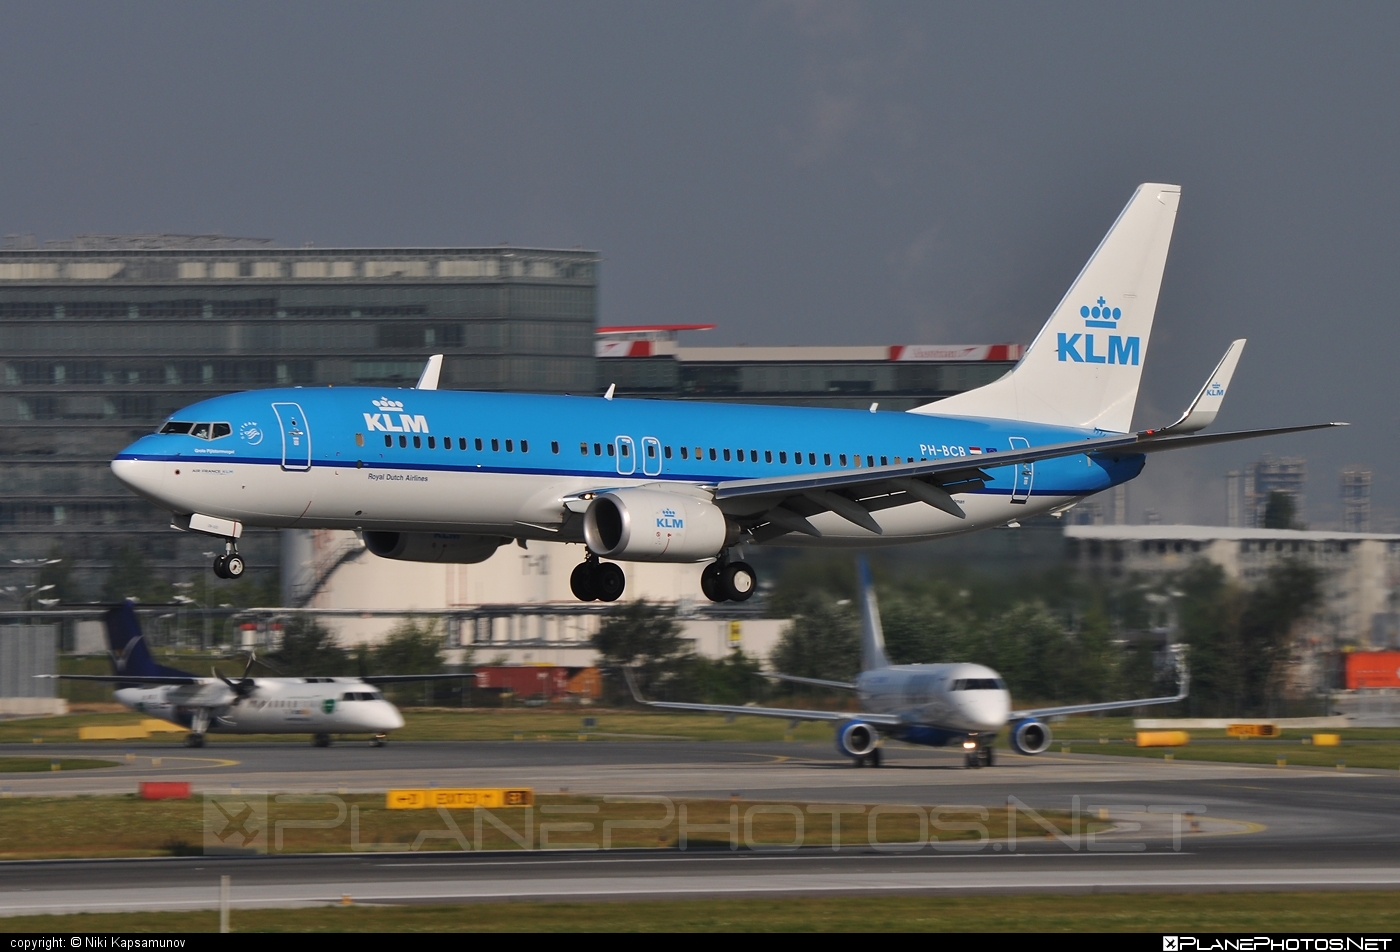 Boeing 737-800 - PH-BCB operated by KLM Royal Dutch Airlines #b737 #b737nextgen #b737ng #boeing #boeing737 #klm #klmroyaldutchairlines #royaldutchairlines